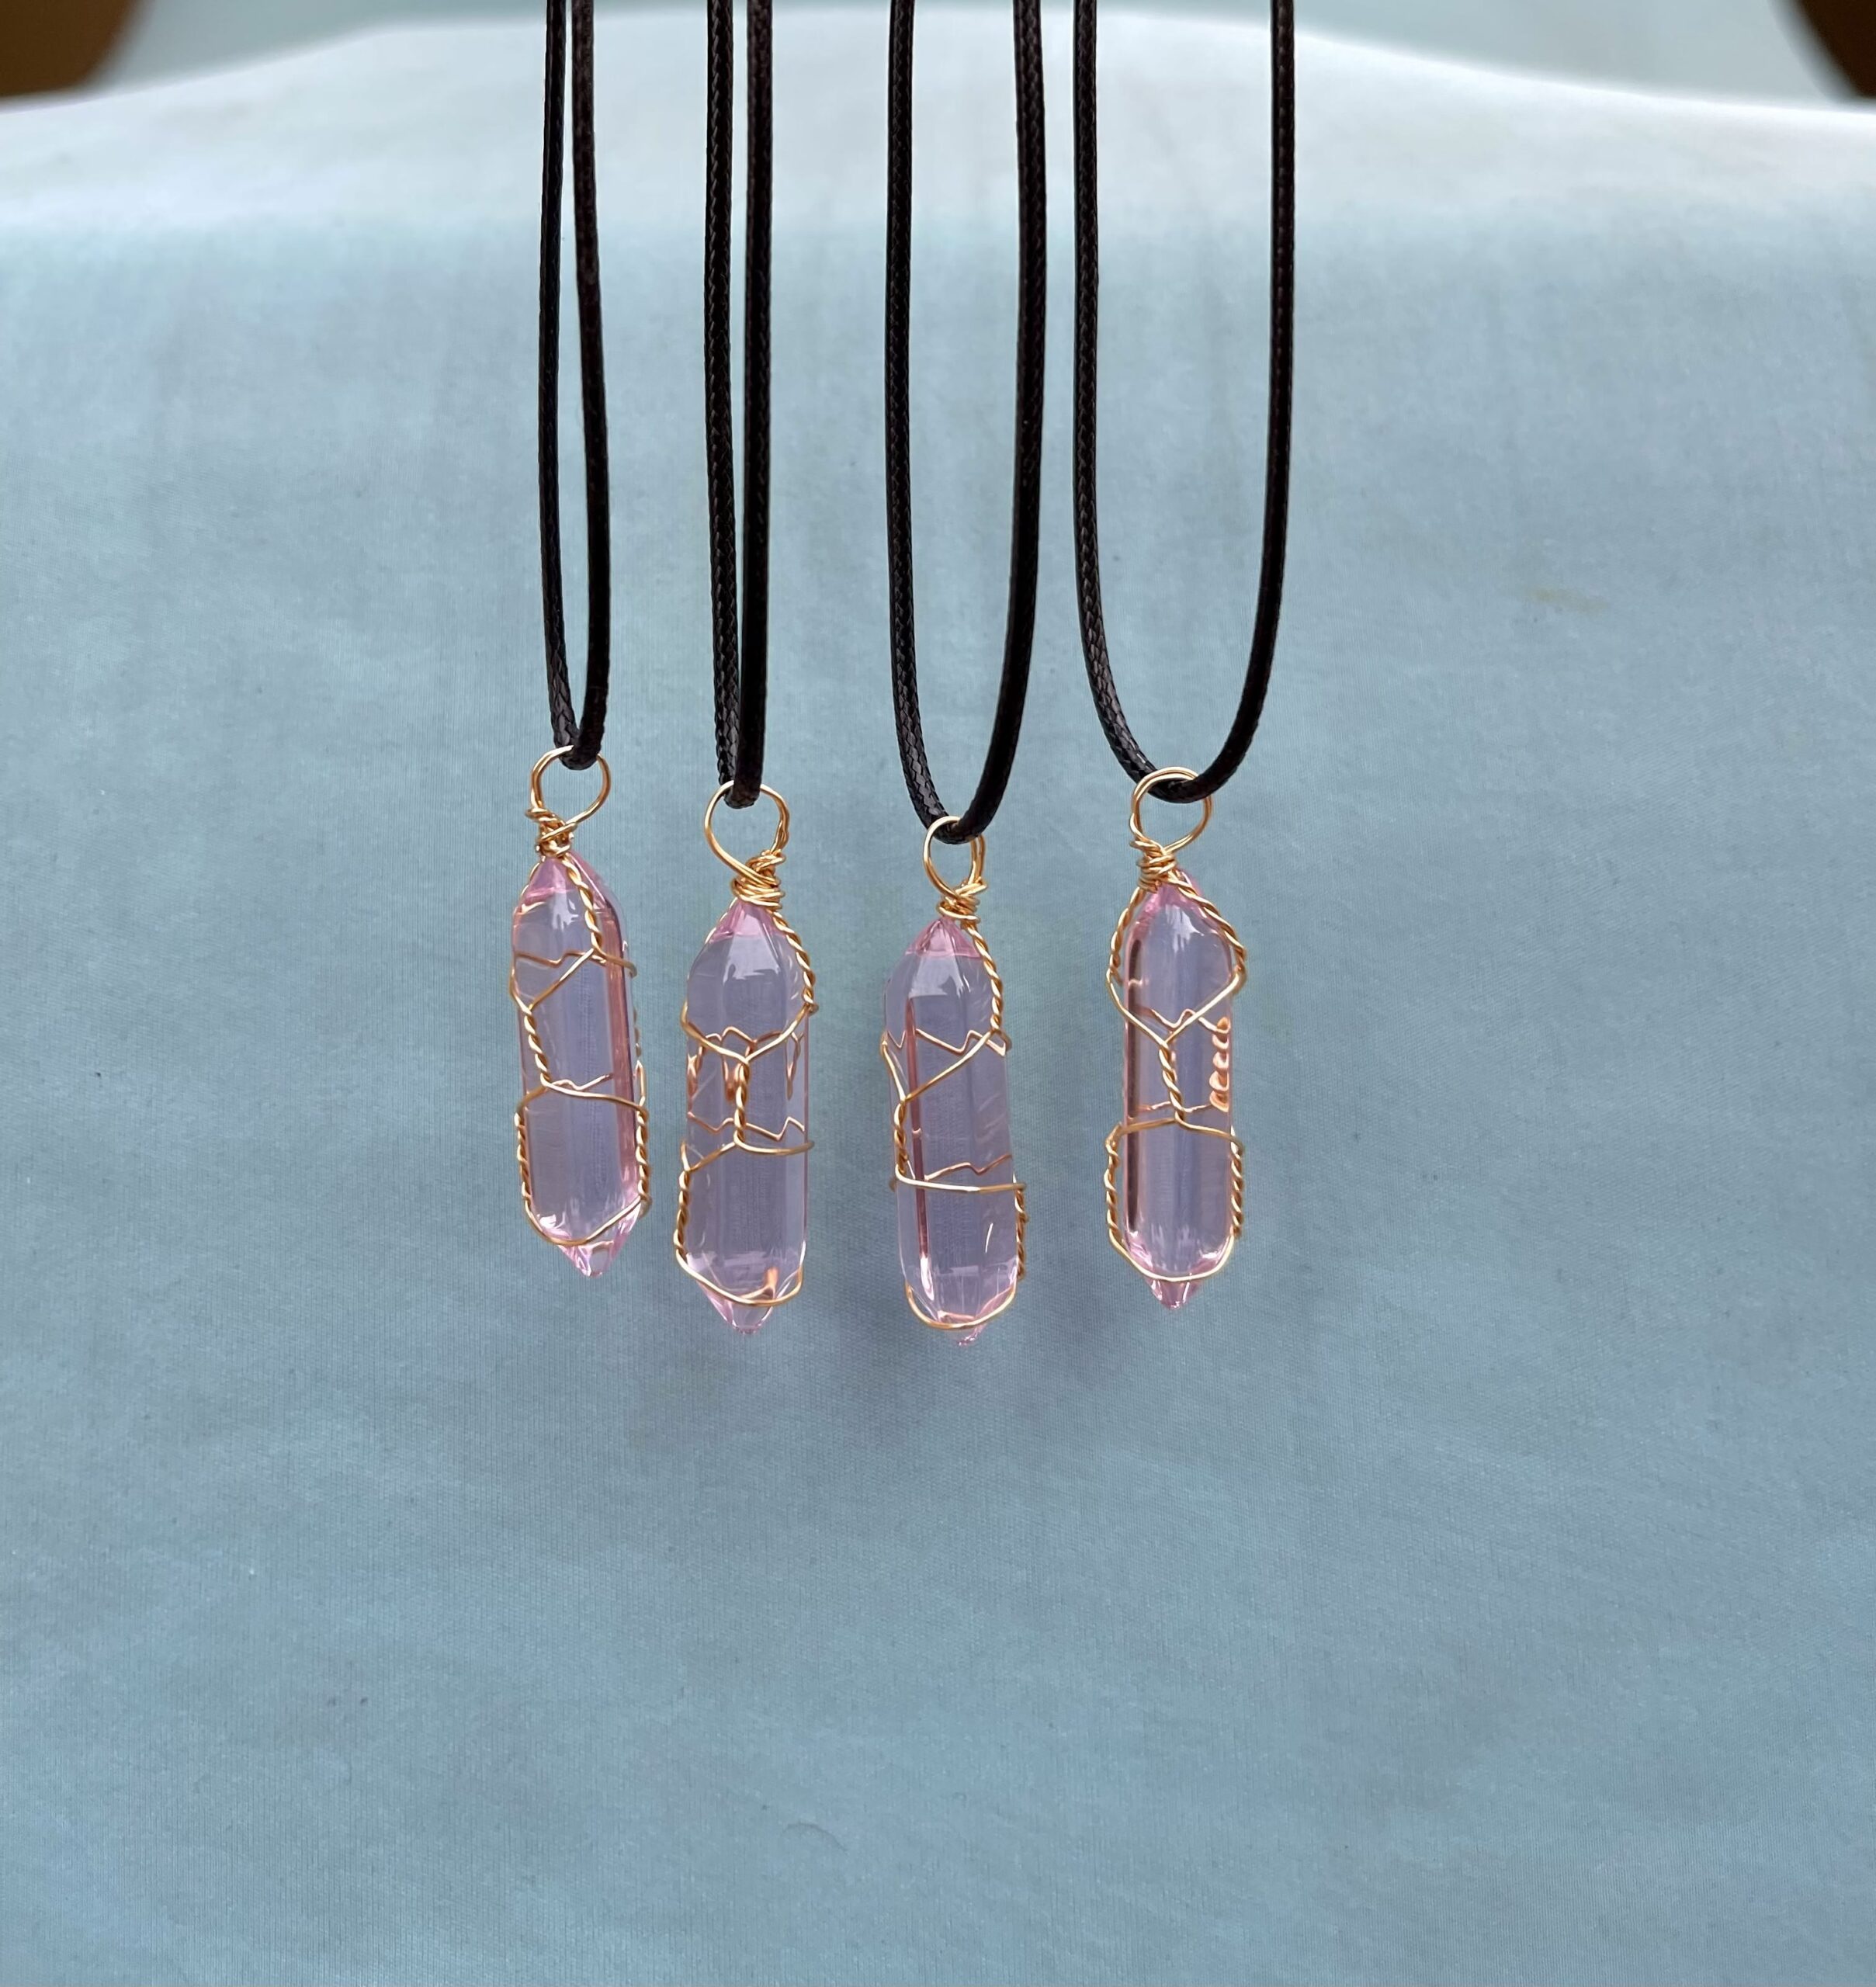 Hexagonal Crystal Stone Necklaces - DripSZN